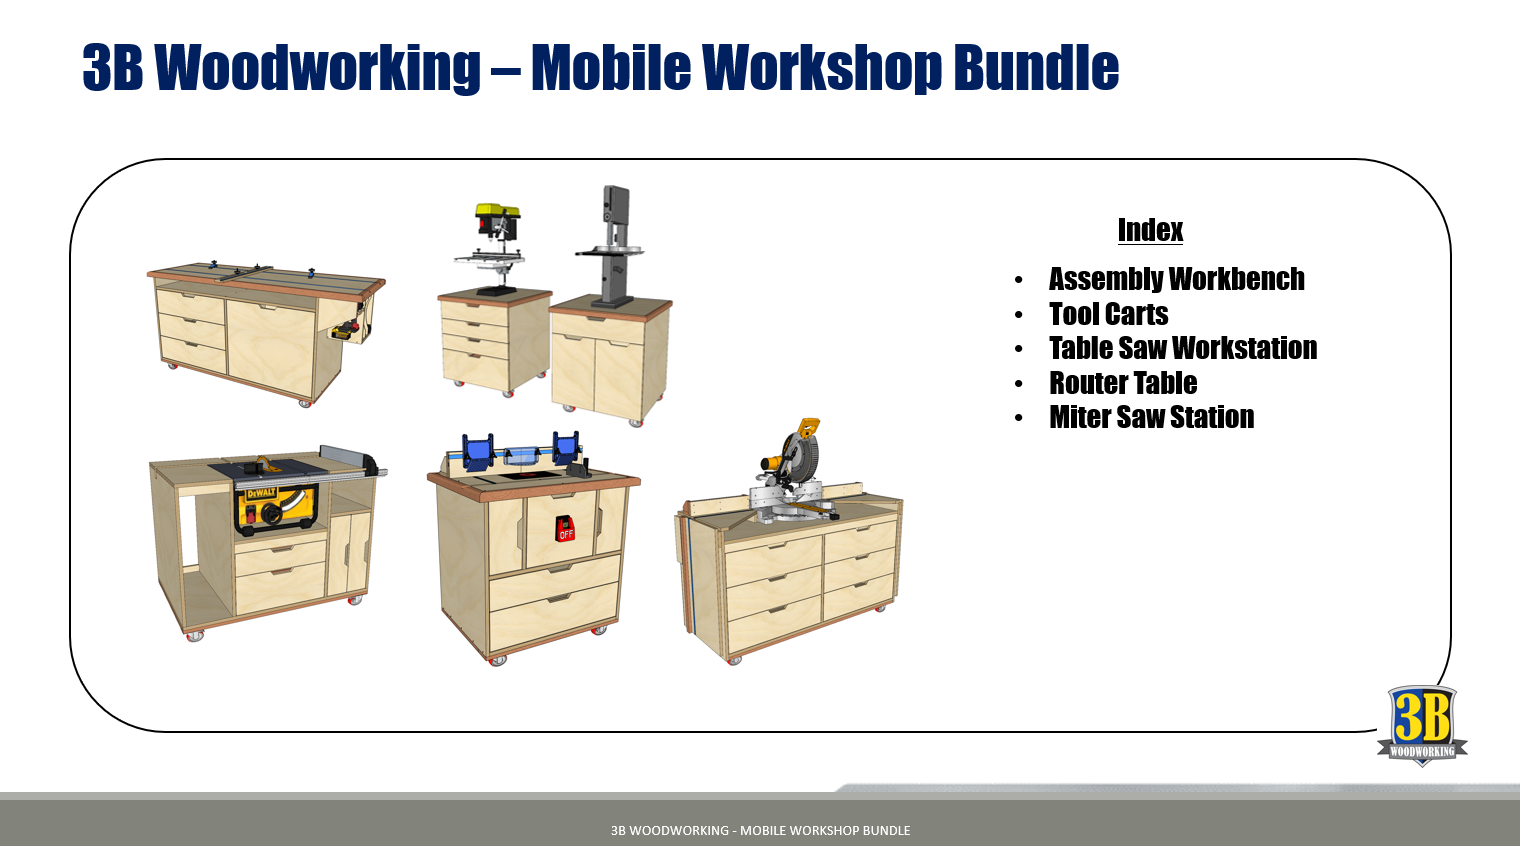 Mobile Work Bundle Build Plans Woodworking 3b